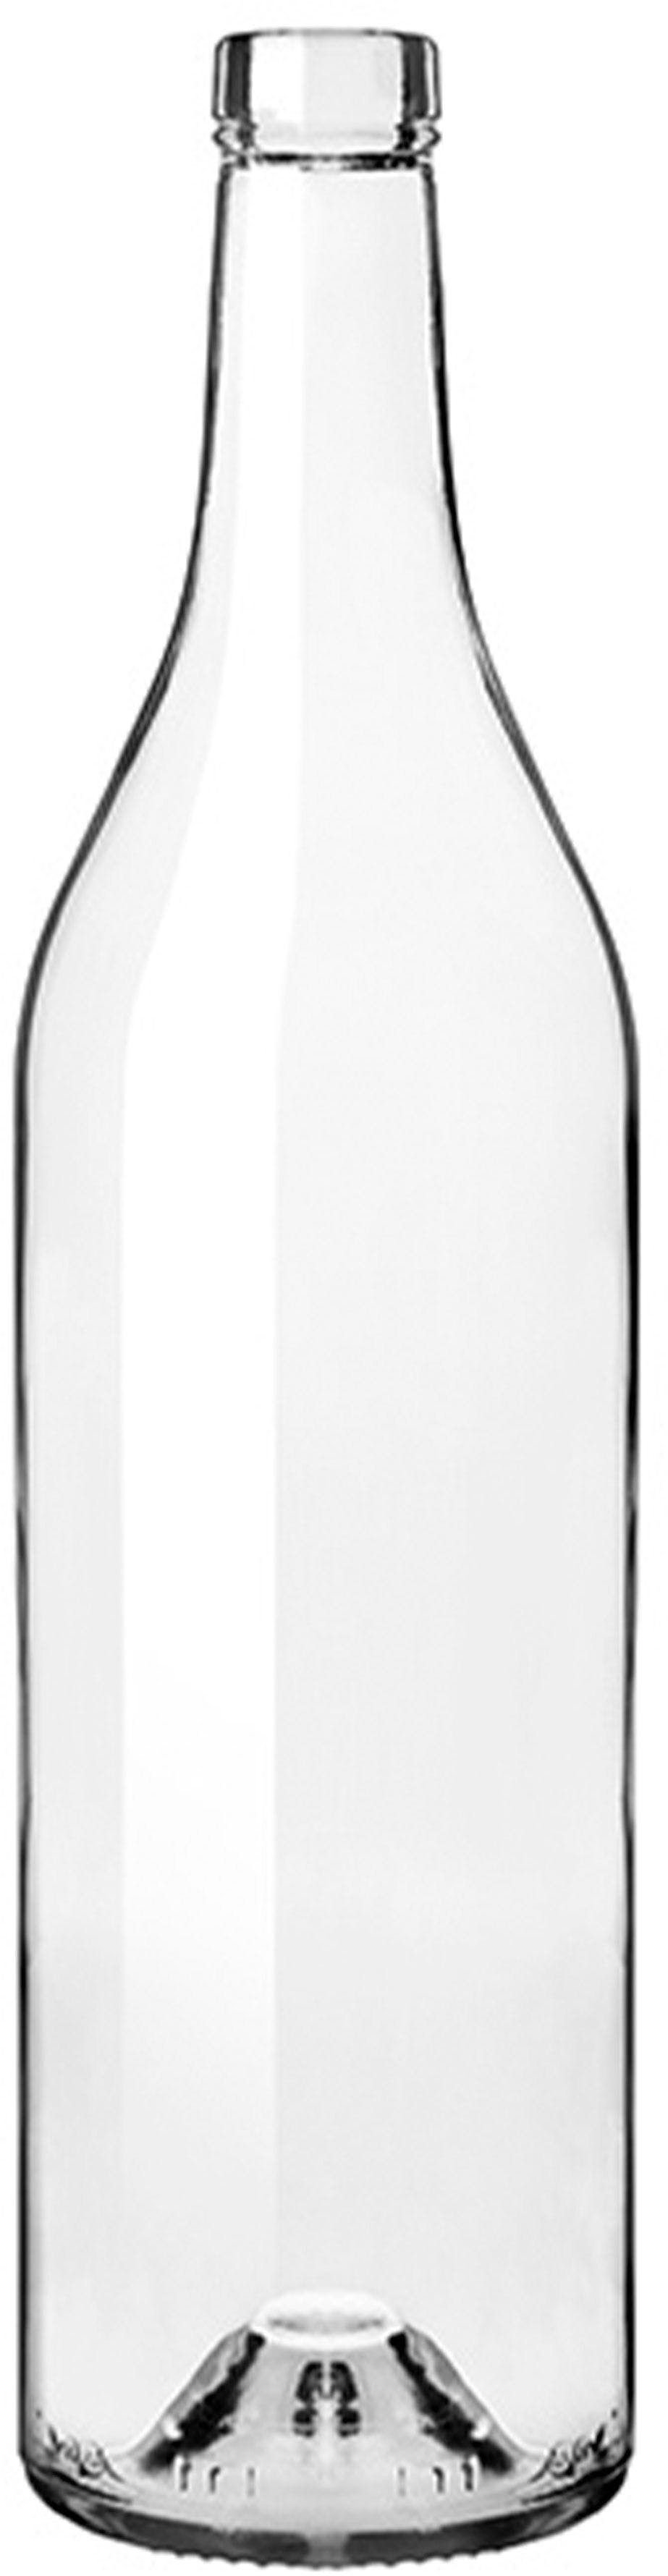 Bottiglia COGNACAISE  750 ml BG-Sughero